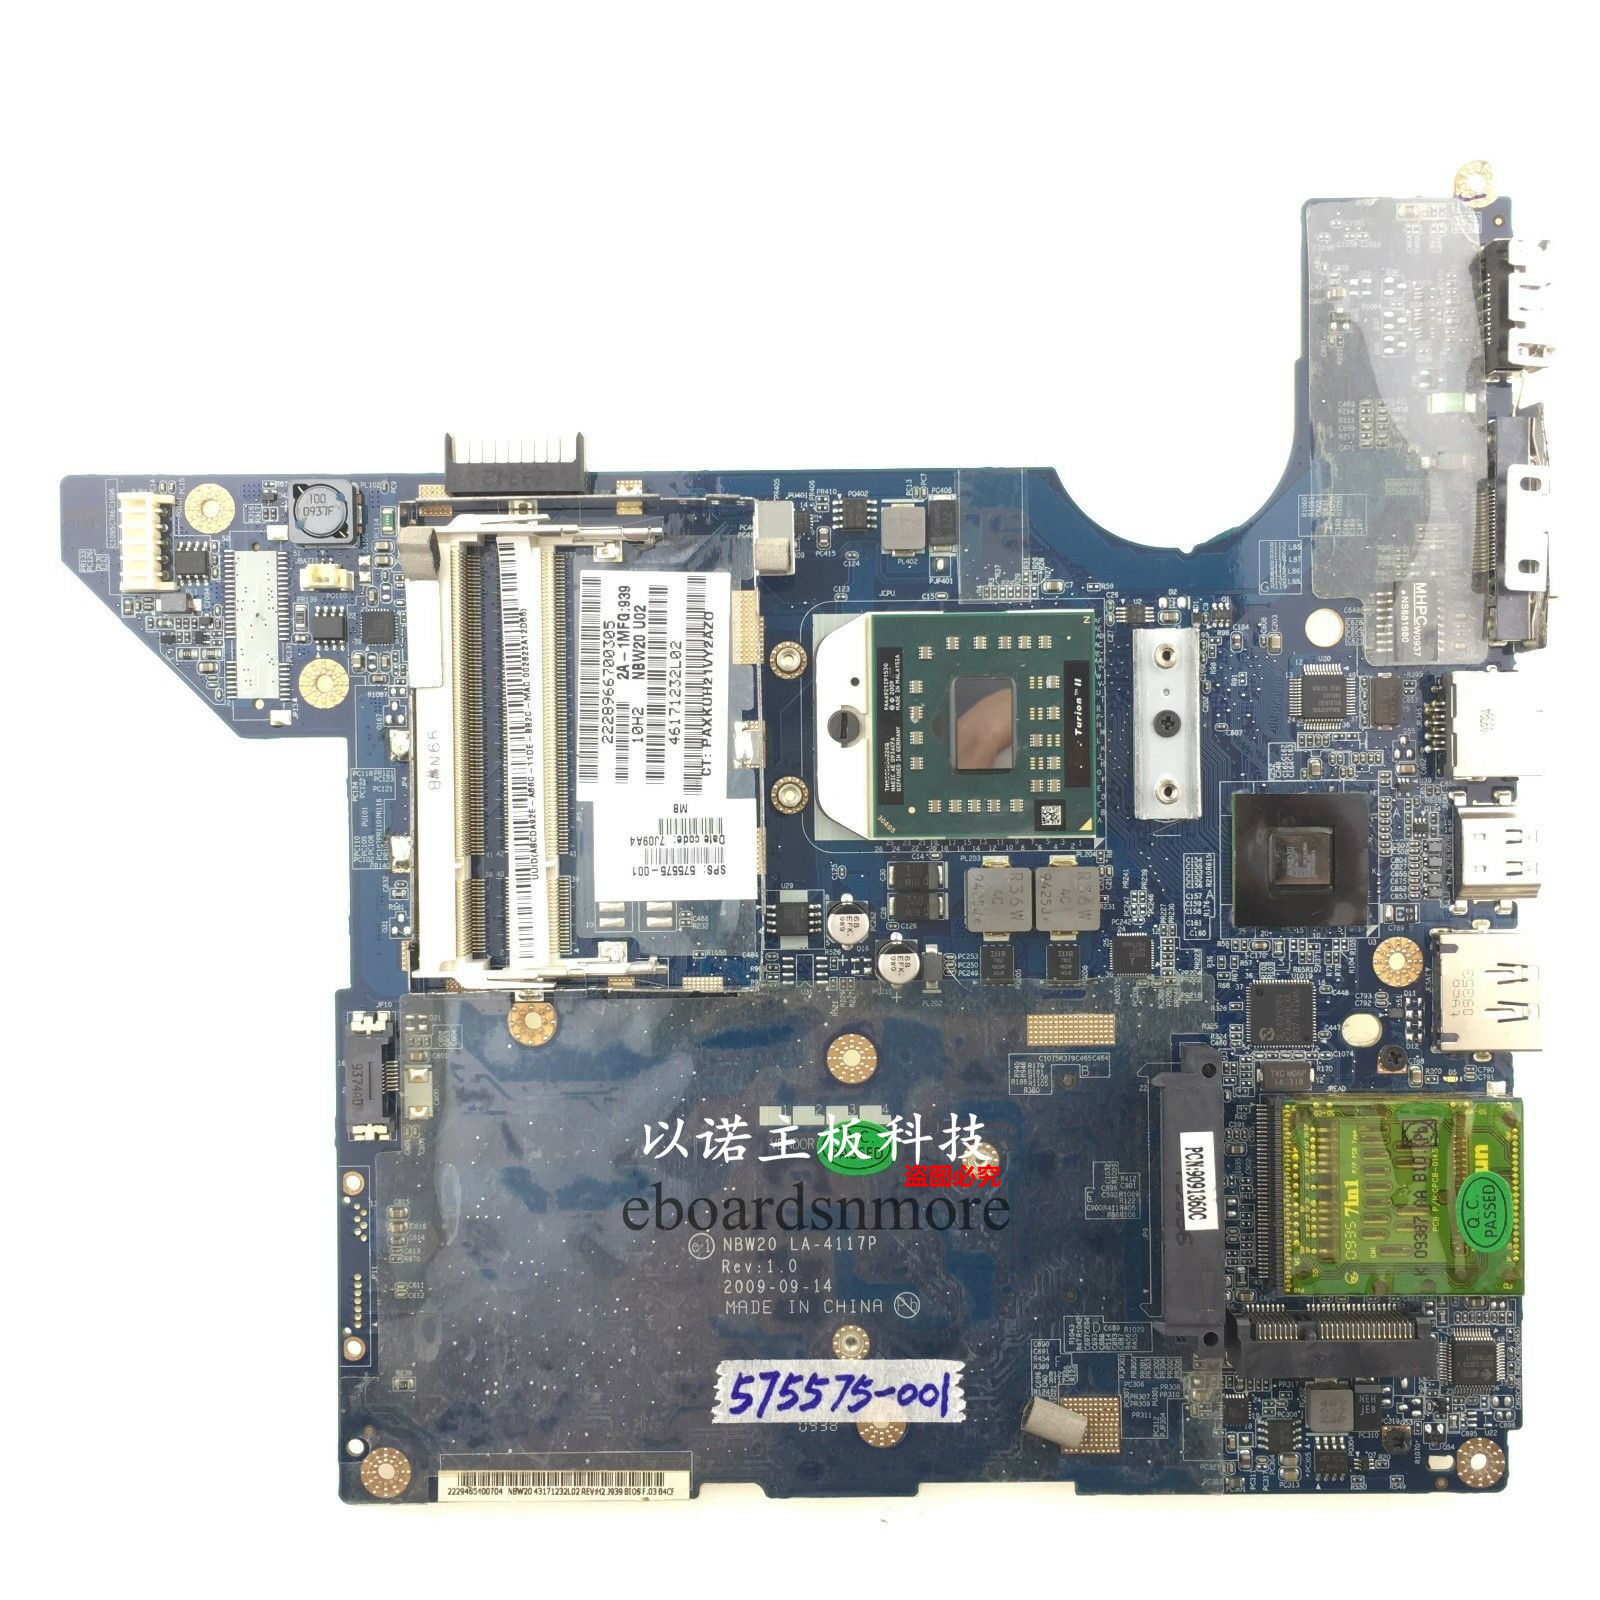 575575-001 AMD MOTHERBOARD for HP PAVILION DV4-2000 SERIES LAPTOP LA-4117P Compatible CPU Brand: AMD Input